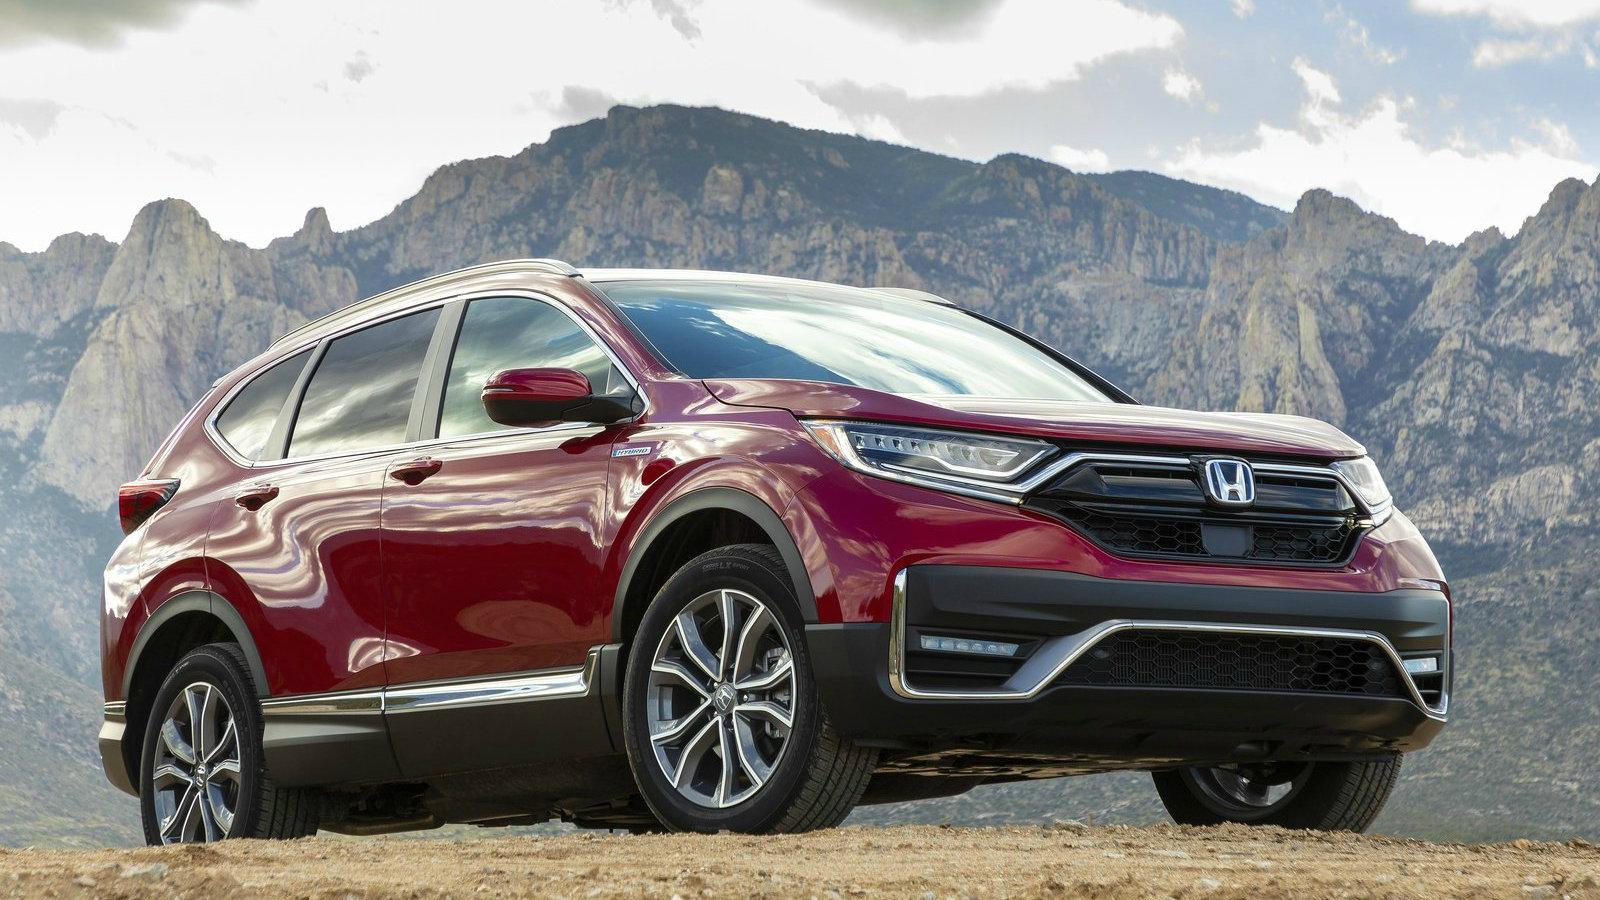 Dream Offers από την Honda: Αποκτήστε Civic με όφελος 2.100 ευρώ